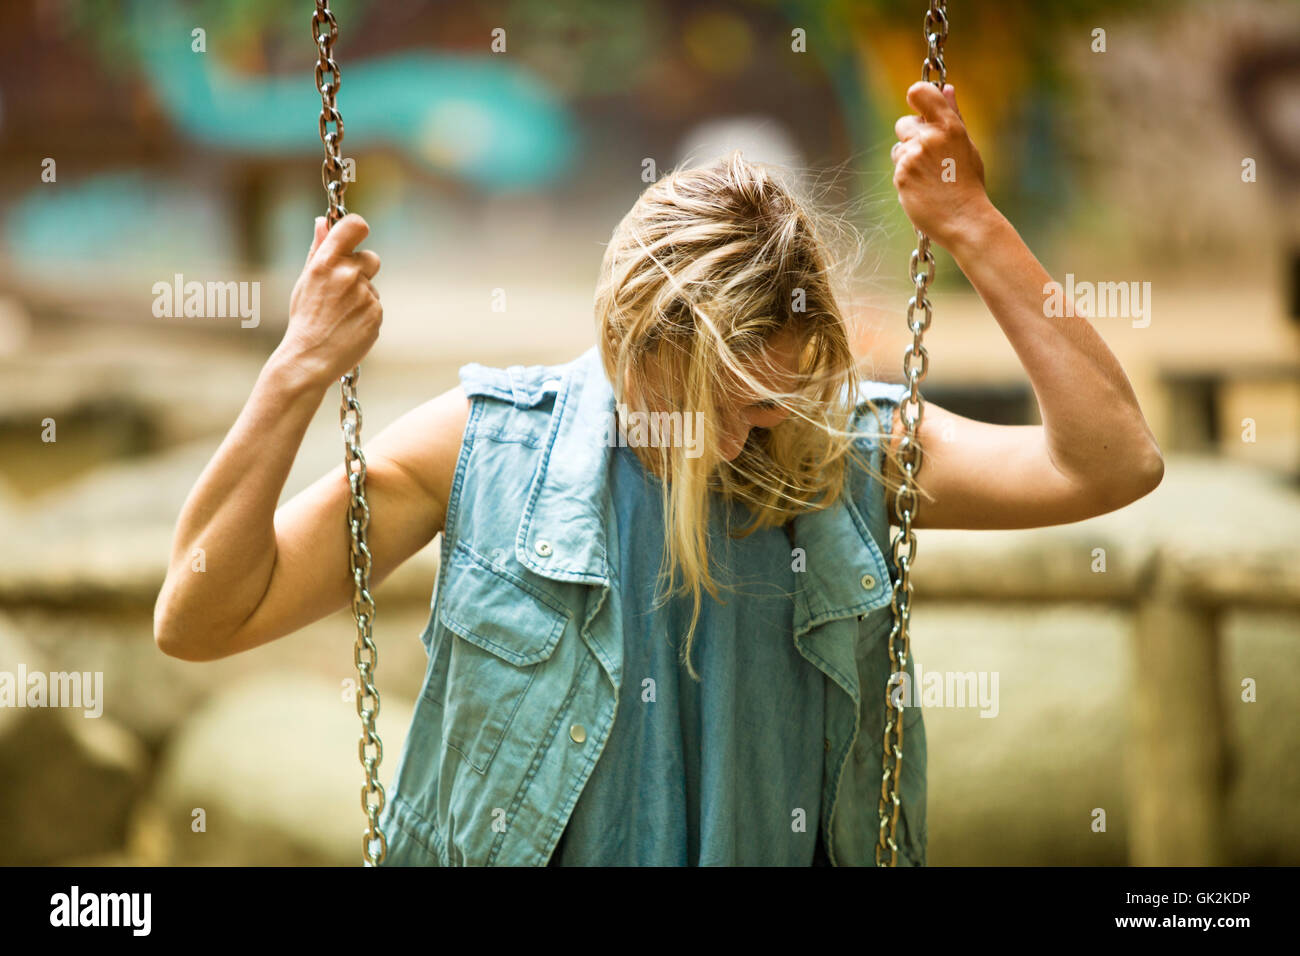 blond woman sitting on swing at playground having fun Stock Photo